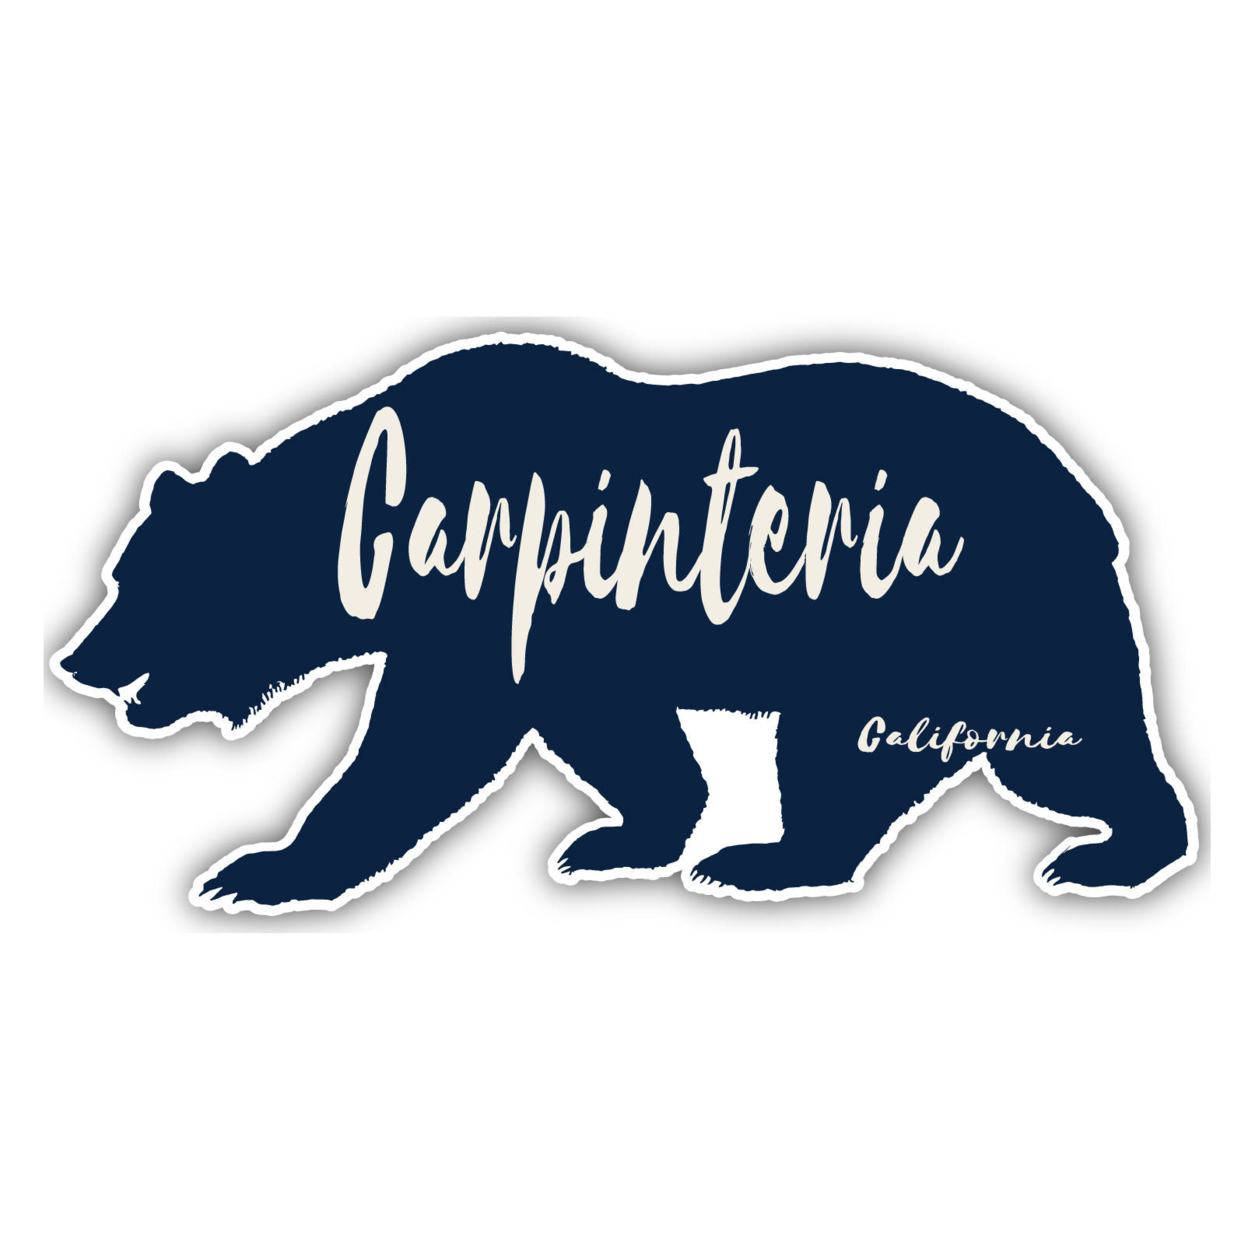 Carpinteria California Souvenir Decorative Stickers (Choose Theme And Size) - 4-Pack, 8-Inch, Tent